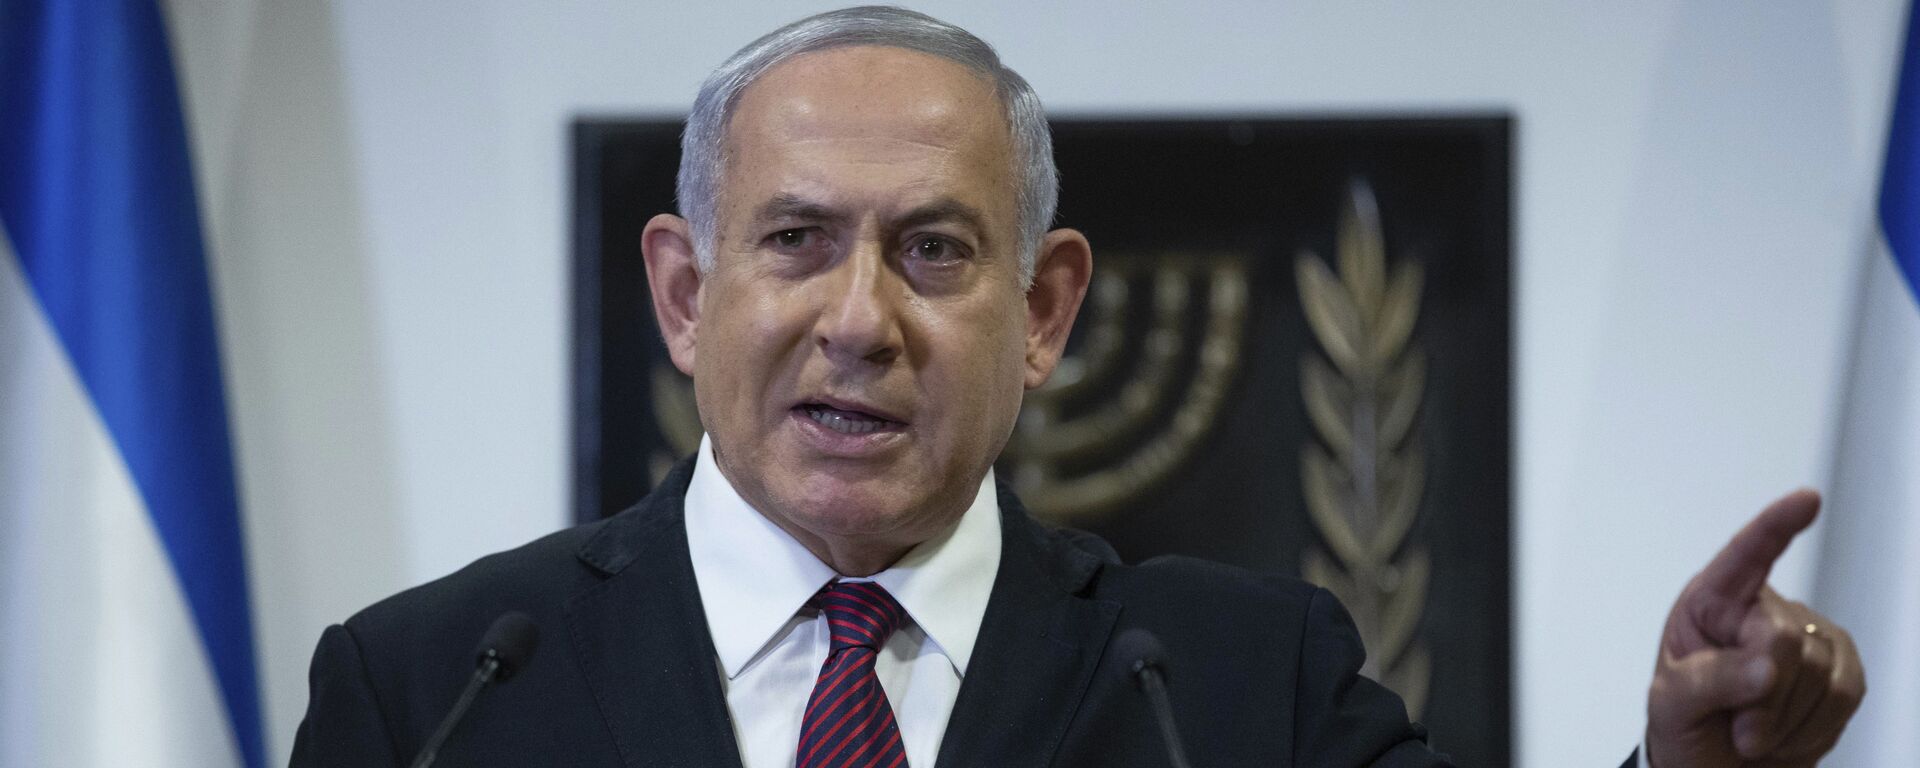 Benjamin Netanyahu, primer ministro israelí - Sputnik Mundo, 1920, 07.04.2021